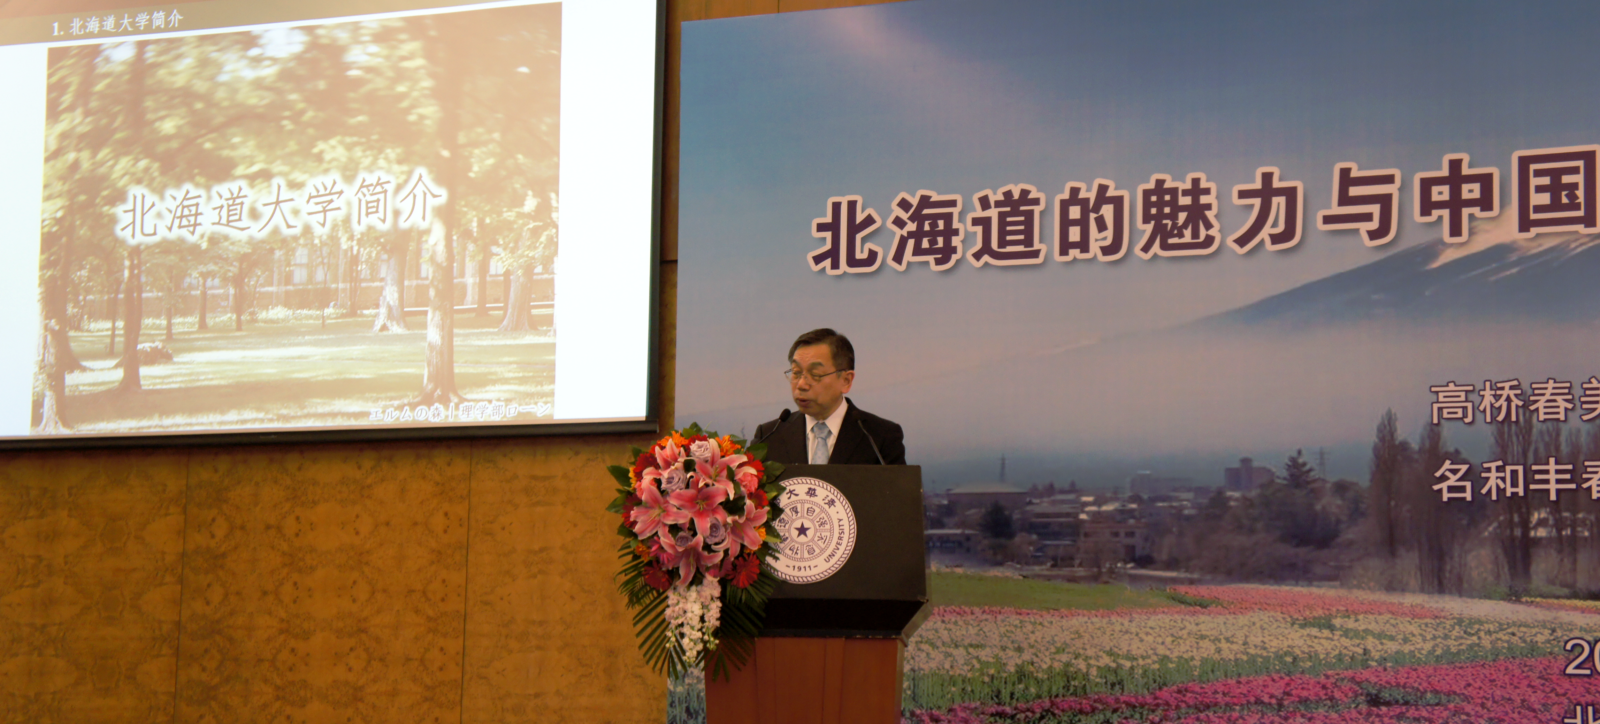 Presentation by President Toyoharu Nawa